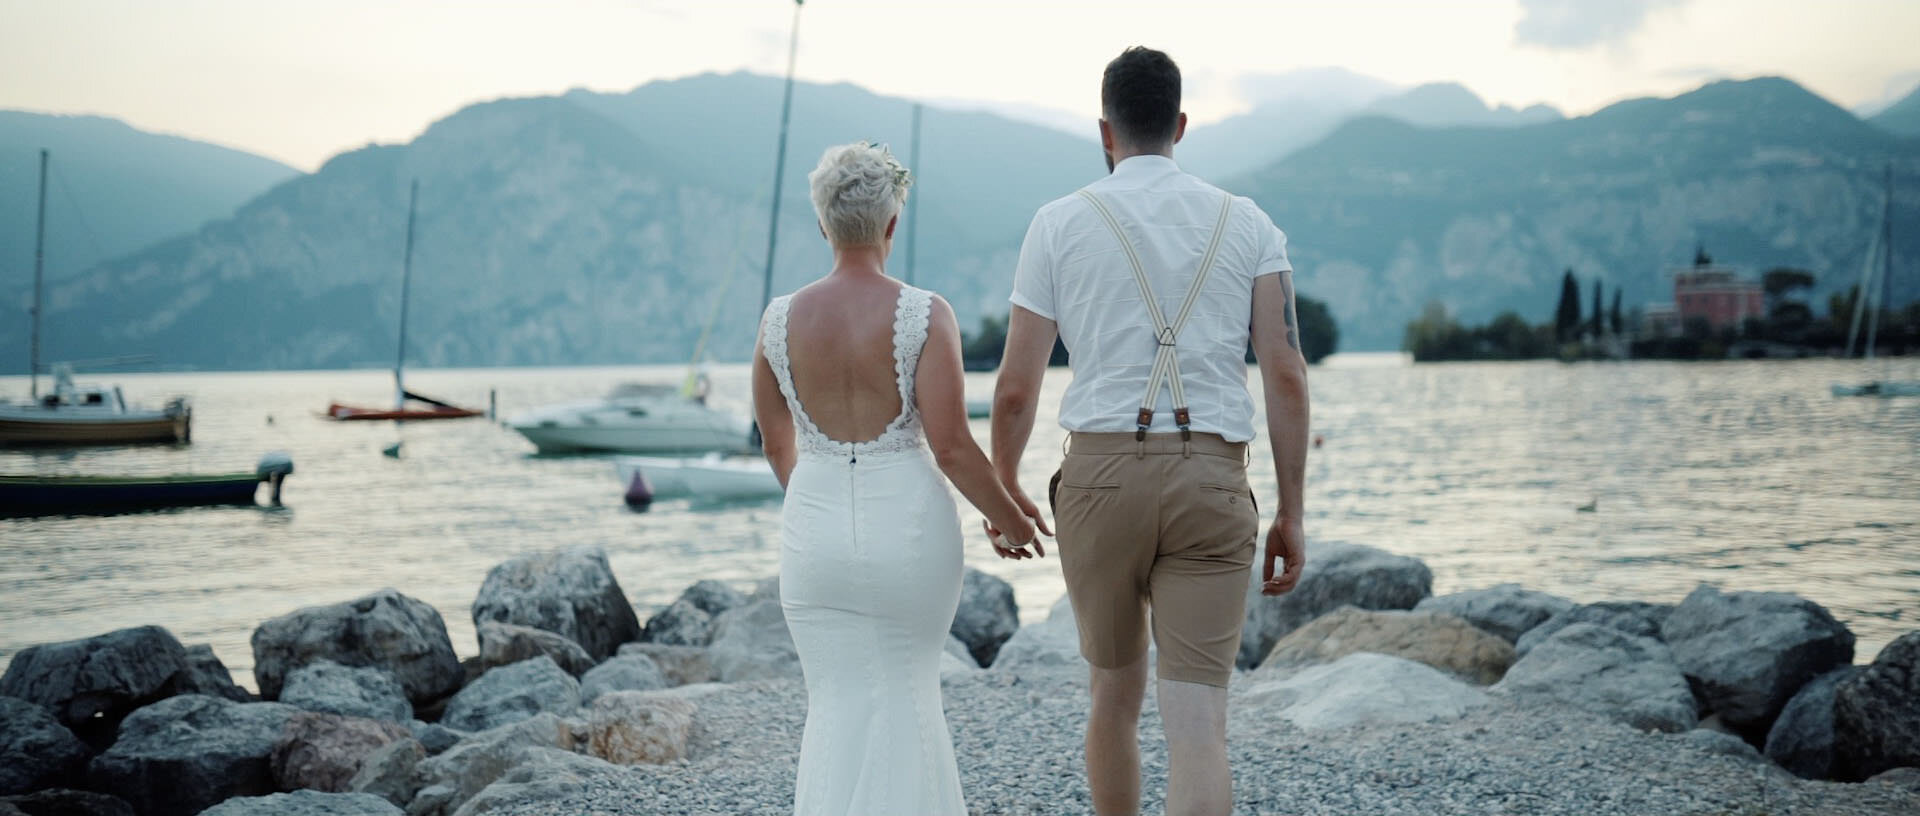 Emma & Tom Destination Wedding Film Video in Malcesine Italy 42.jpg